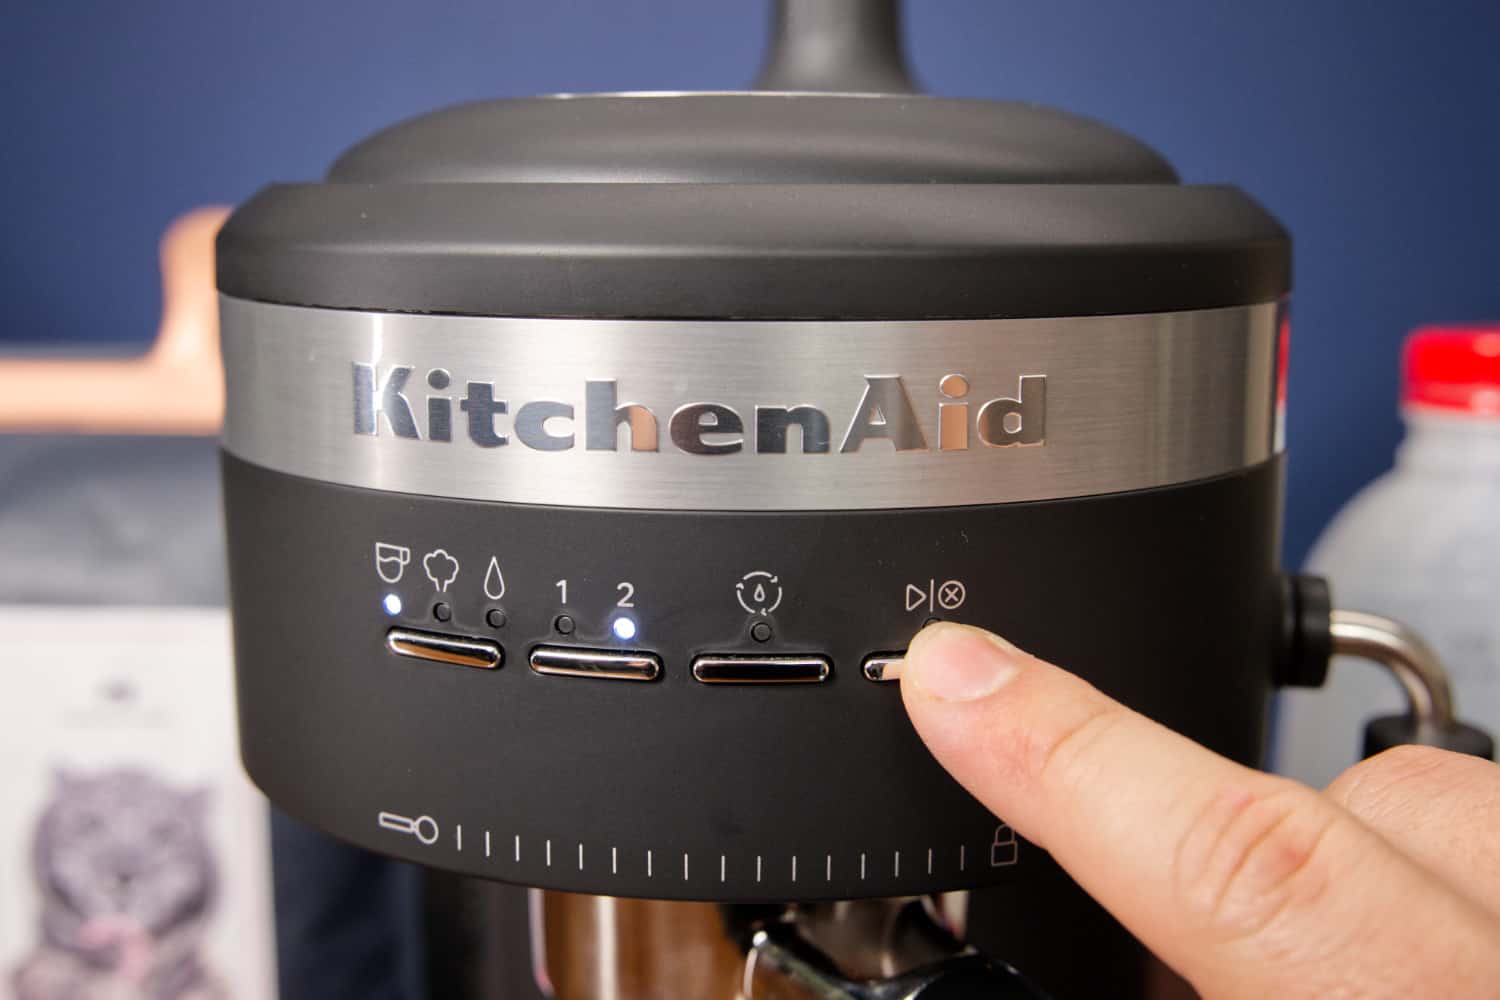 Semi-automatic coffee machine 5KES6403EDG, matt grey, KitchenAid